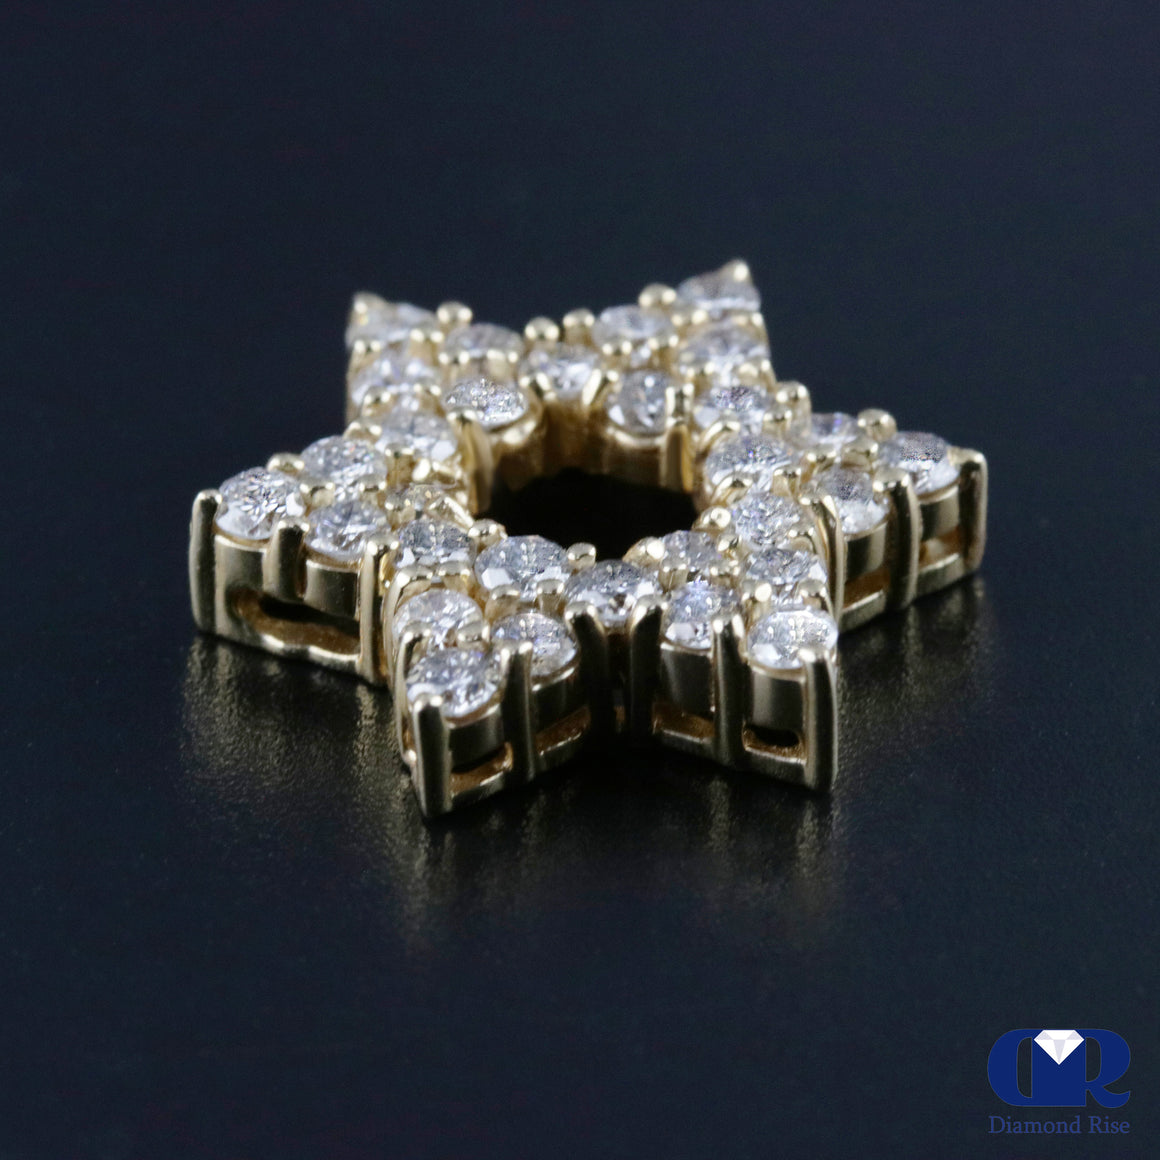 1.05 Ct Round Cut Diamond Star Shaped Pendant In 14K Yellow Gold - Diamond Rise Jewelry